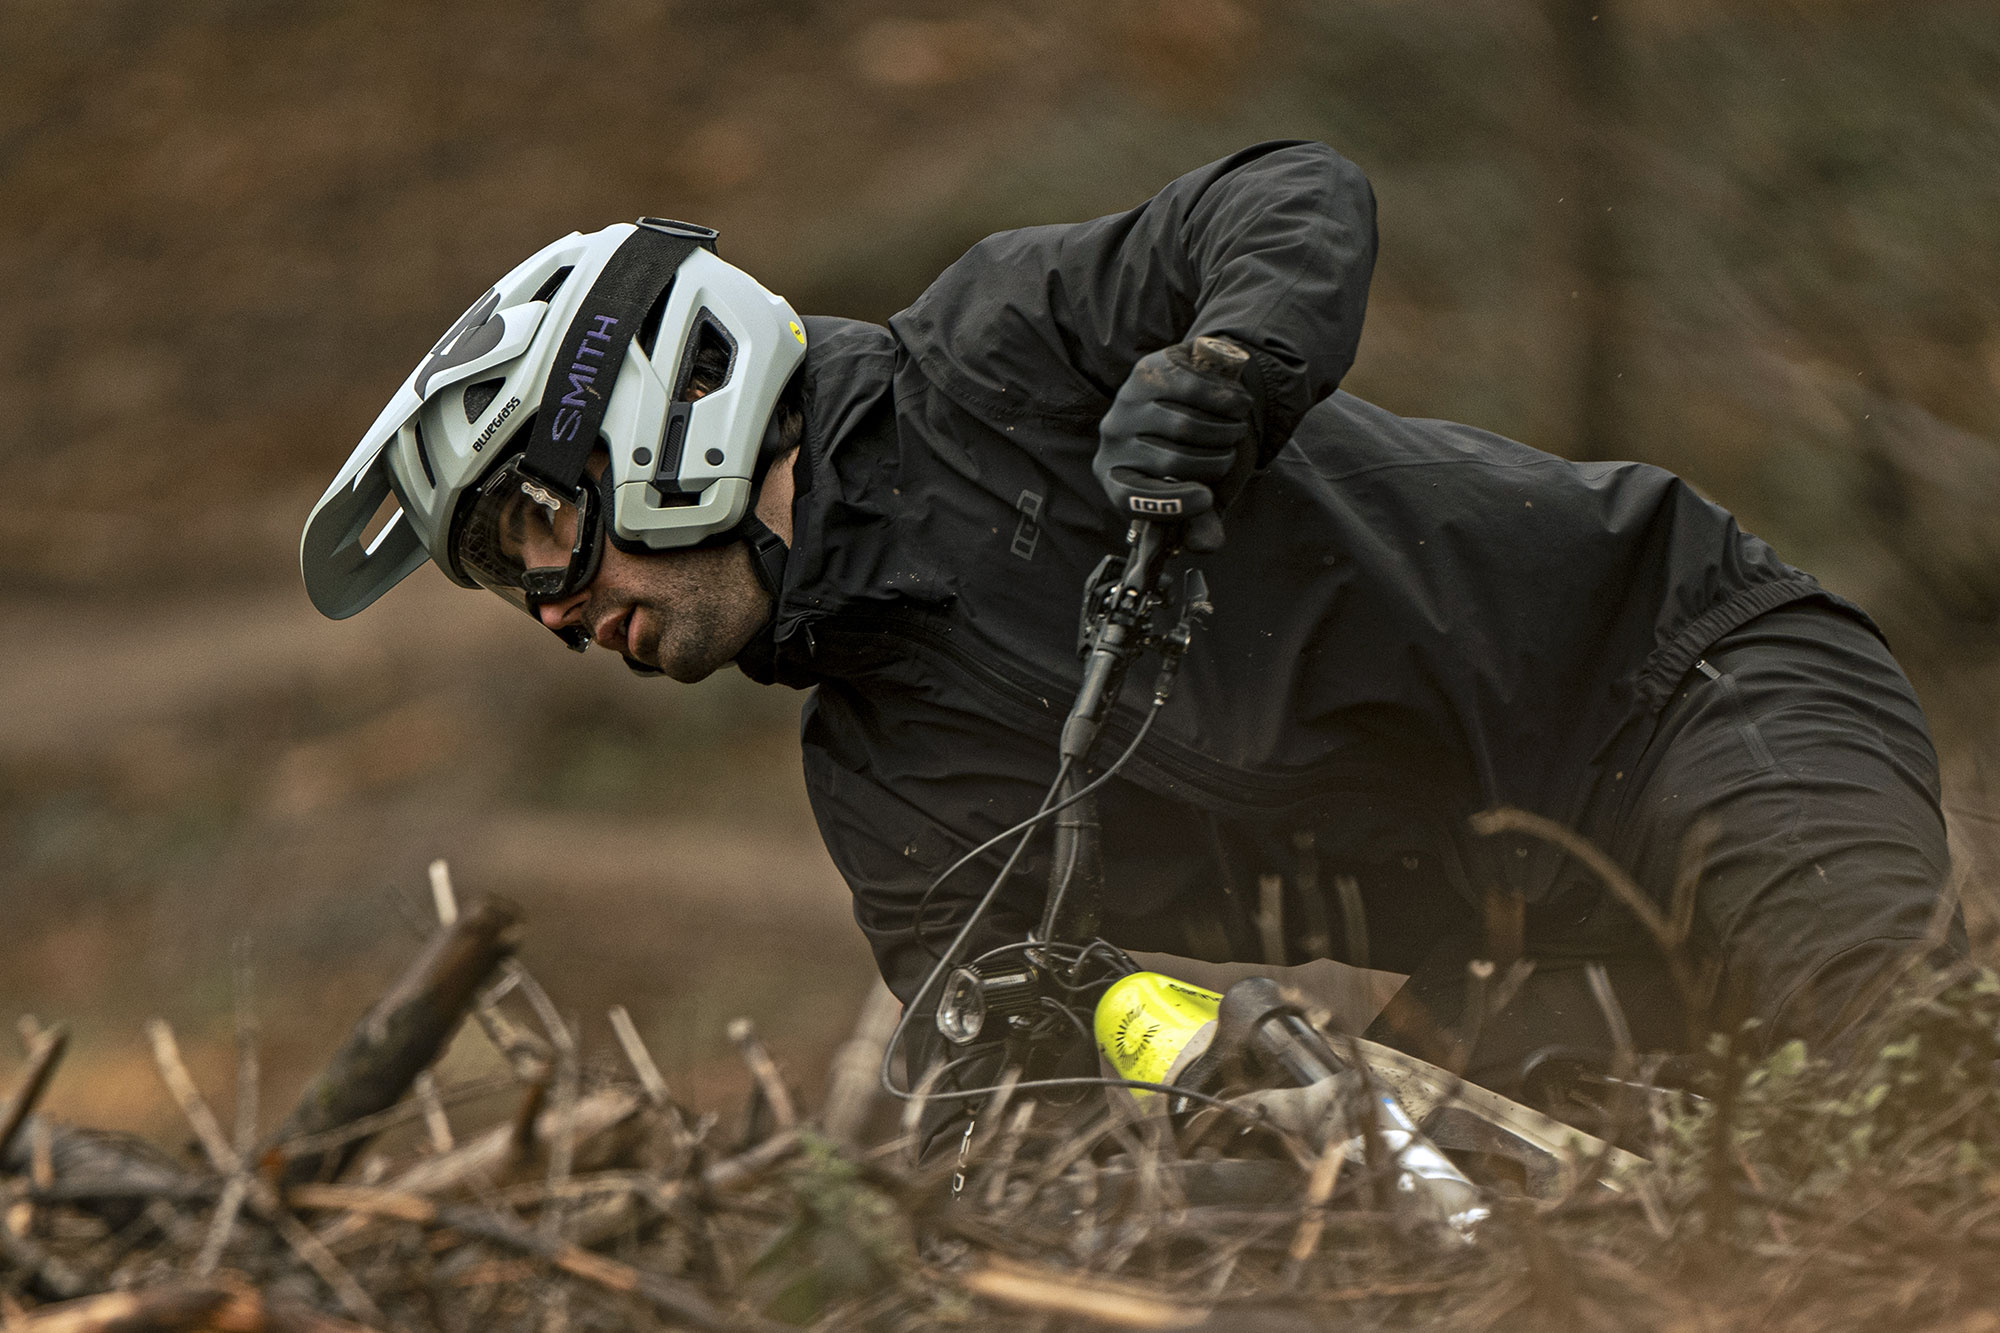 Bluegrass Jetro MIPS 3/4-shell+ enduro mountain bike helmet, riding with goggles